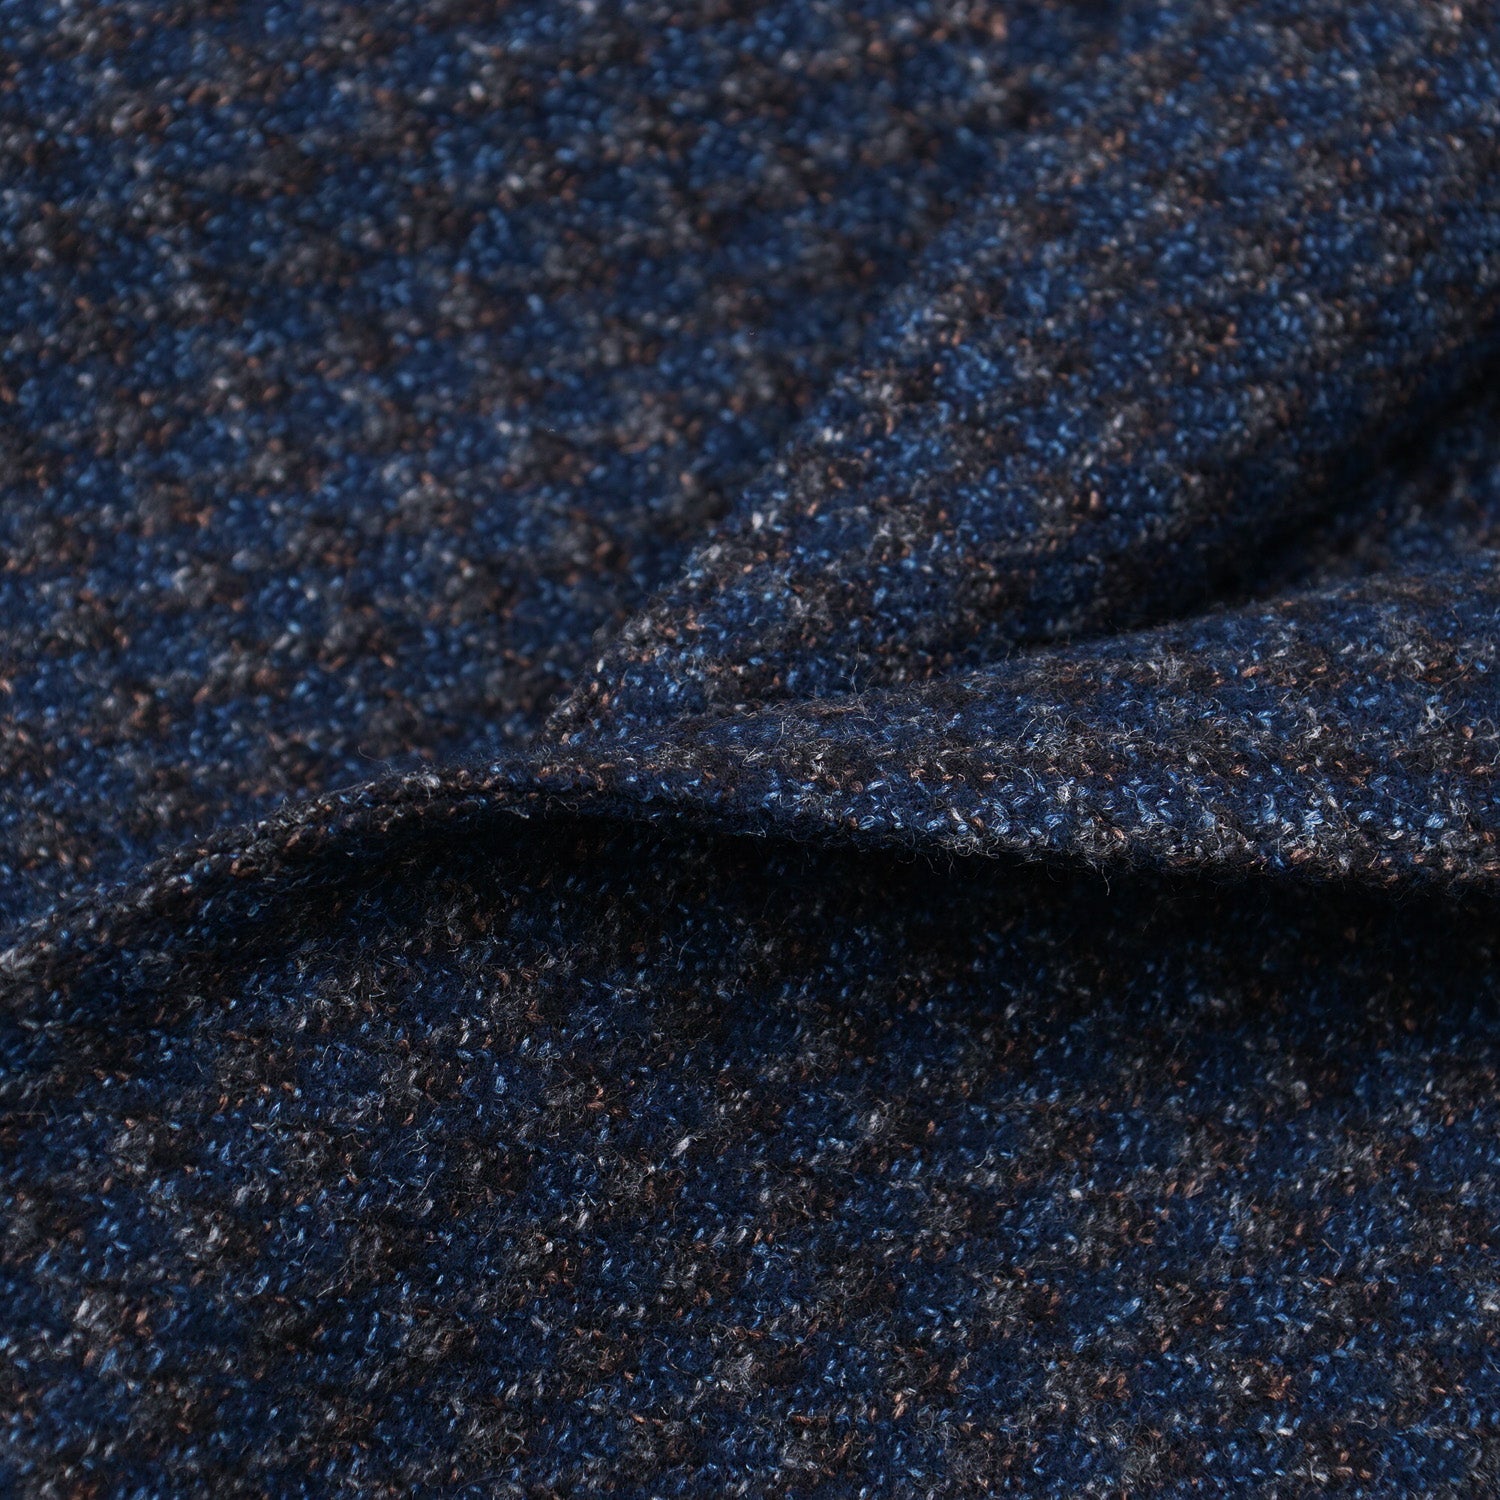 Boglioli Wool-Silk 'K Jacket' Sport Coat - Top Shelf Apparel